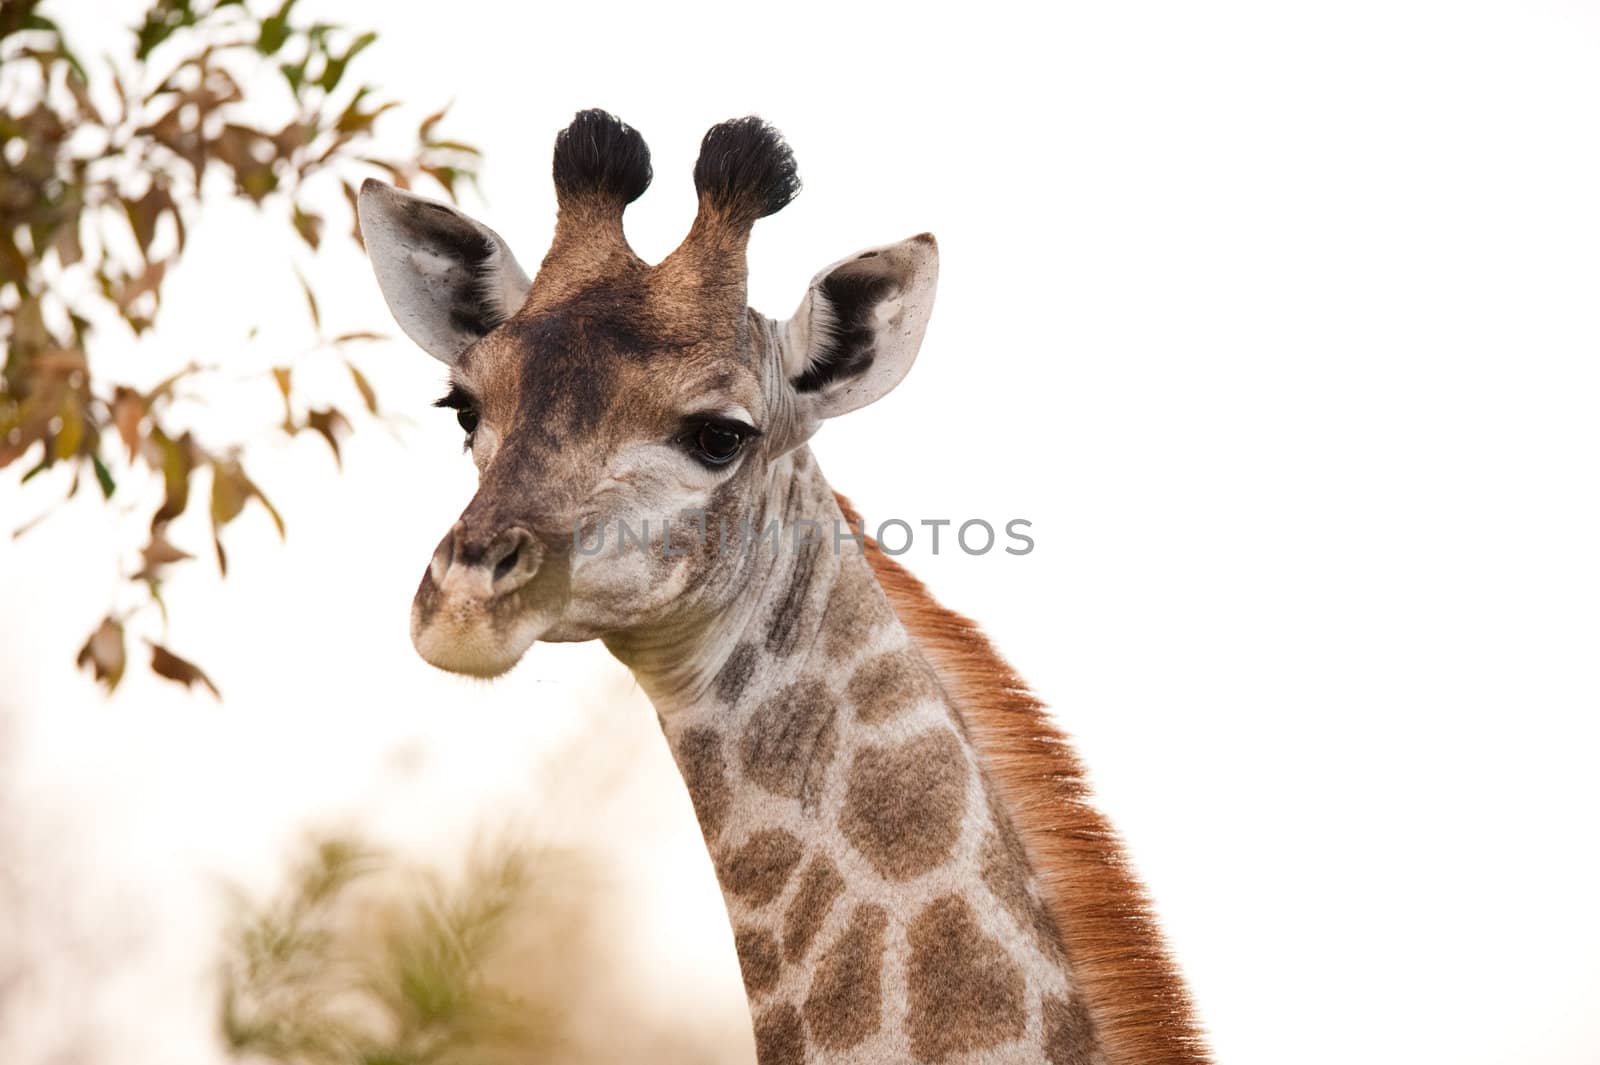 GIRAFFE (Giraffa camelopardalis) up close 2 by edan